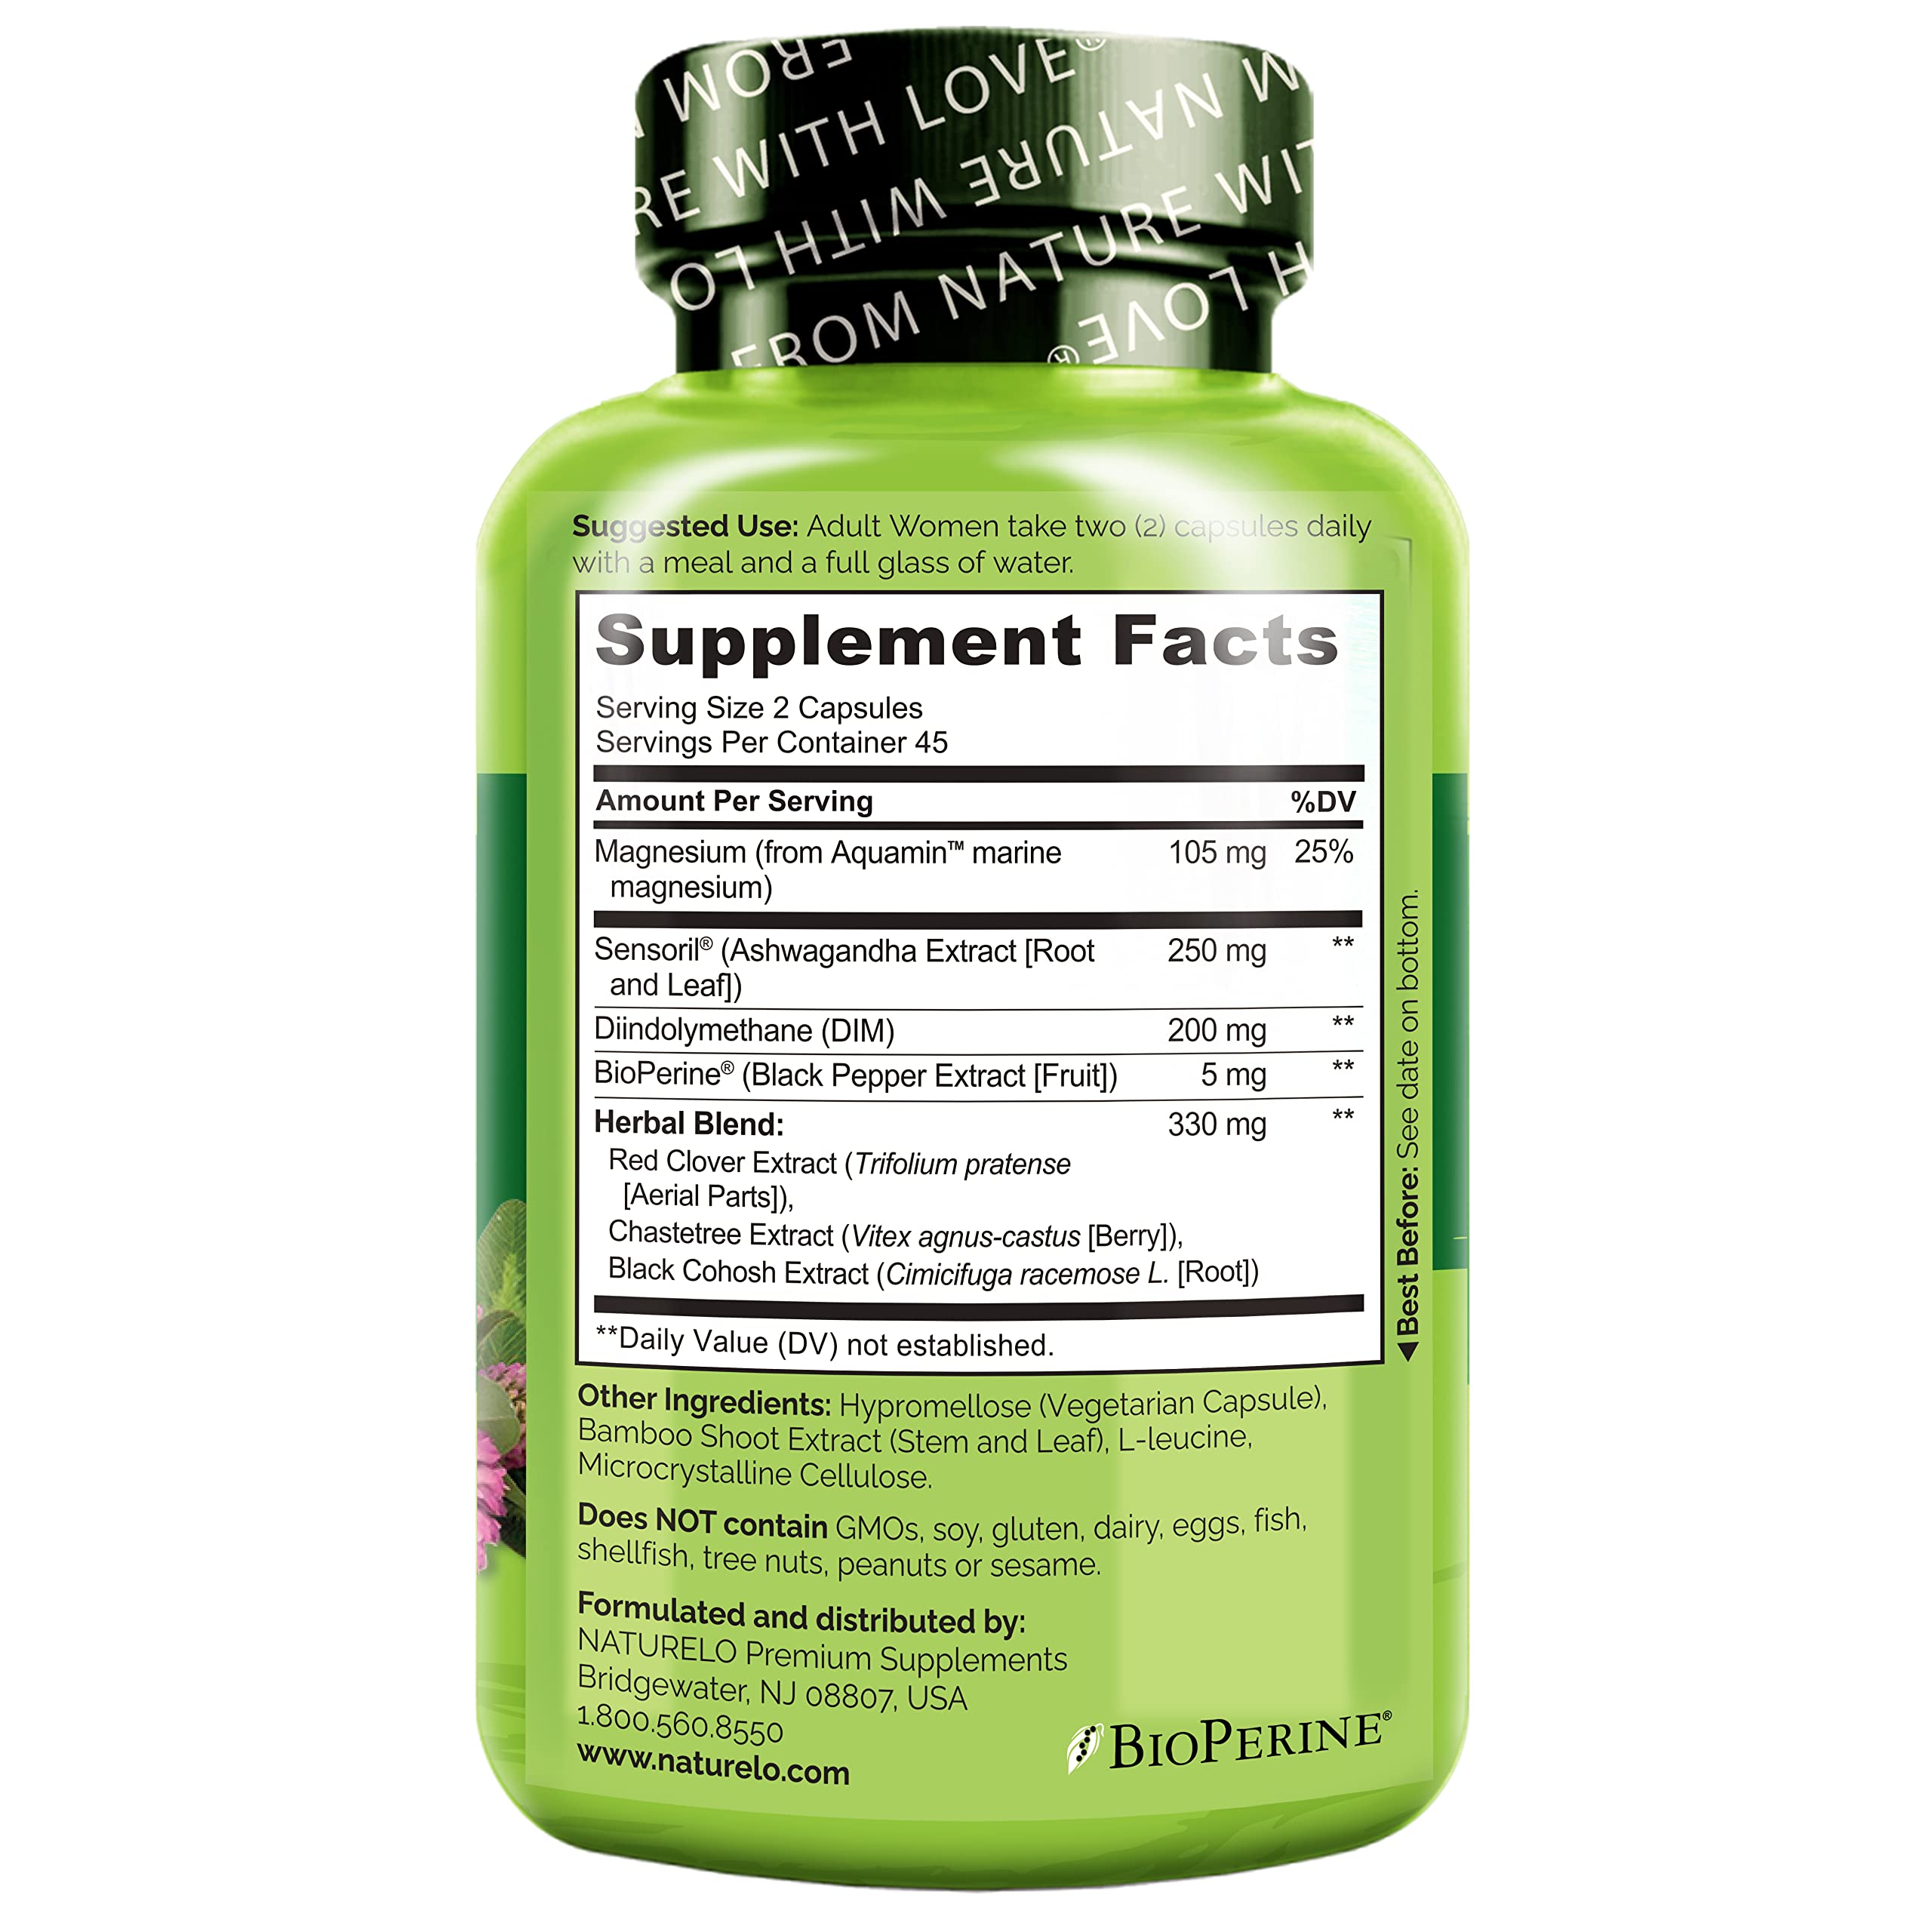 NATURELO Menopause Support, Advanced Multi-Symptom Formula w/Soothing Herbal Blend - 90 Vegetarian Capsules